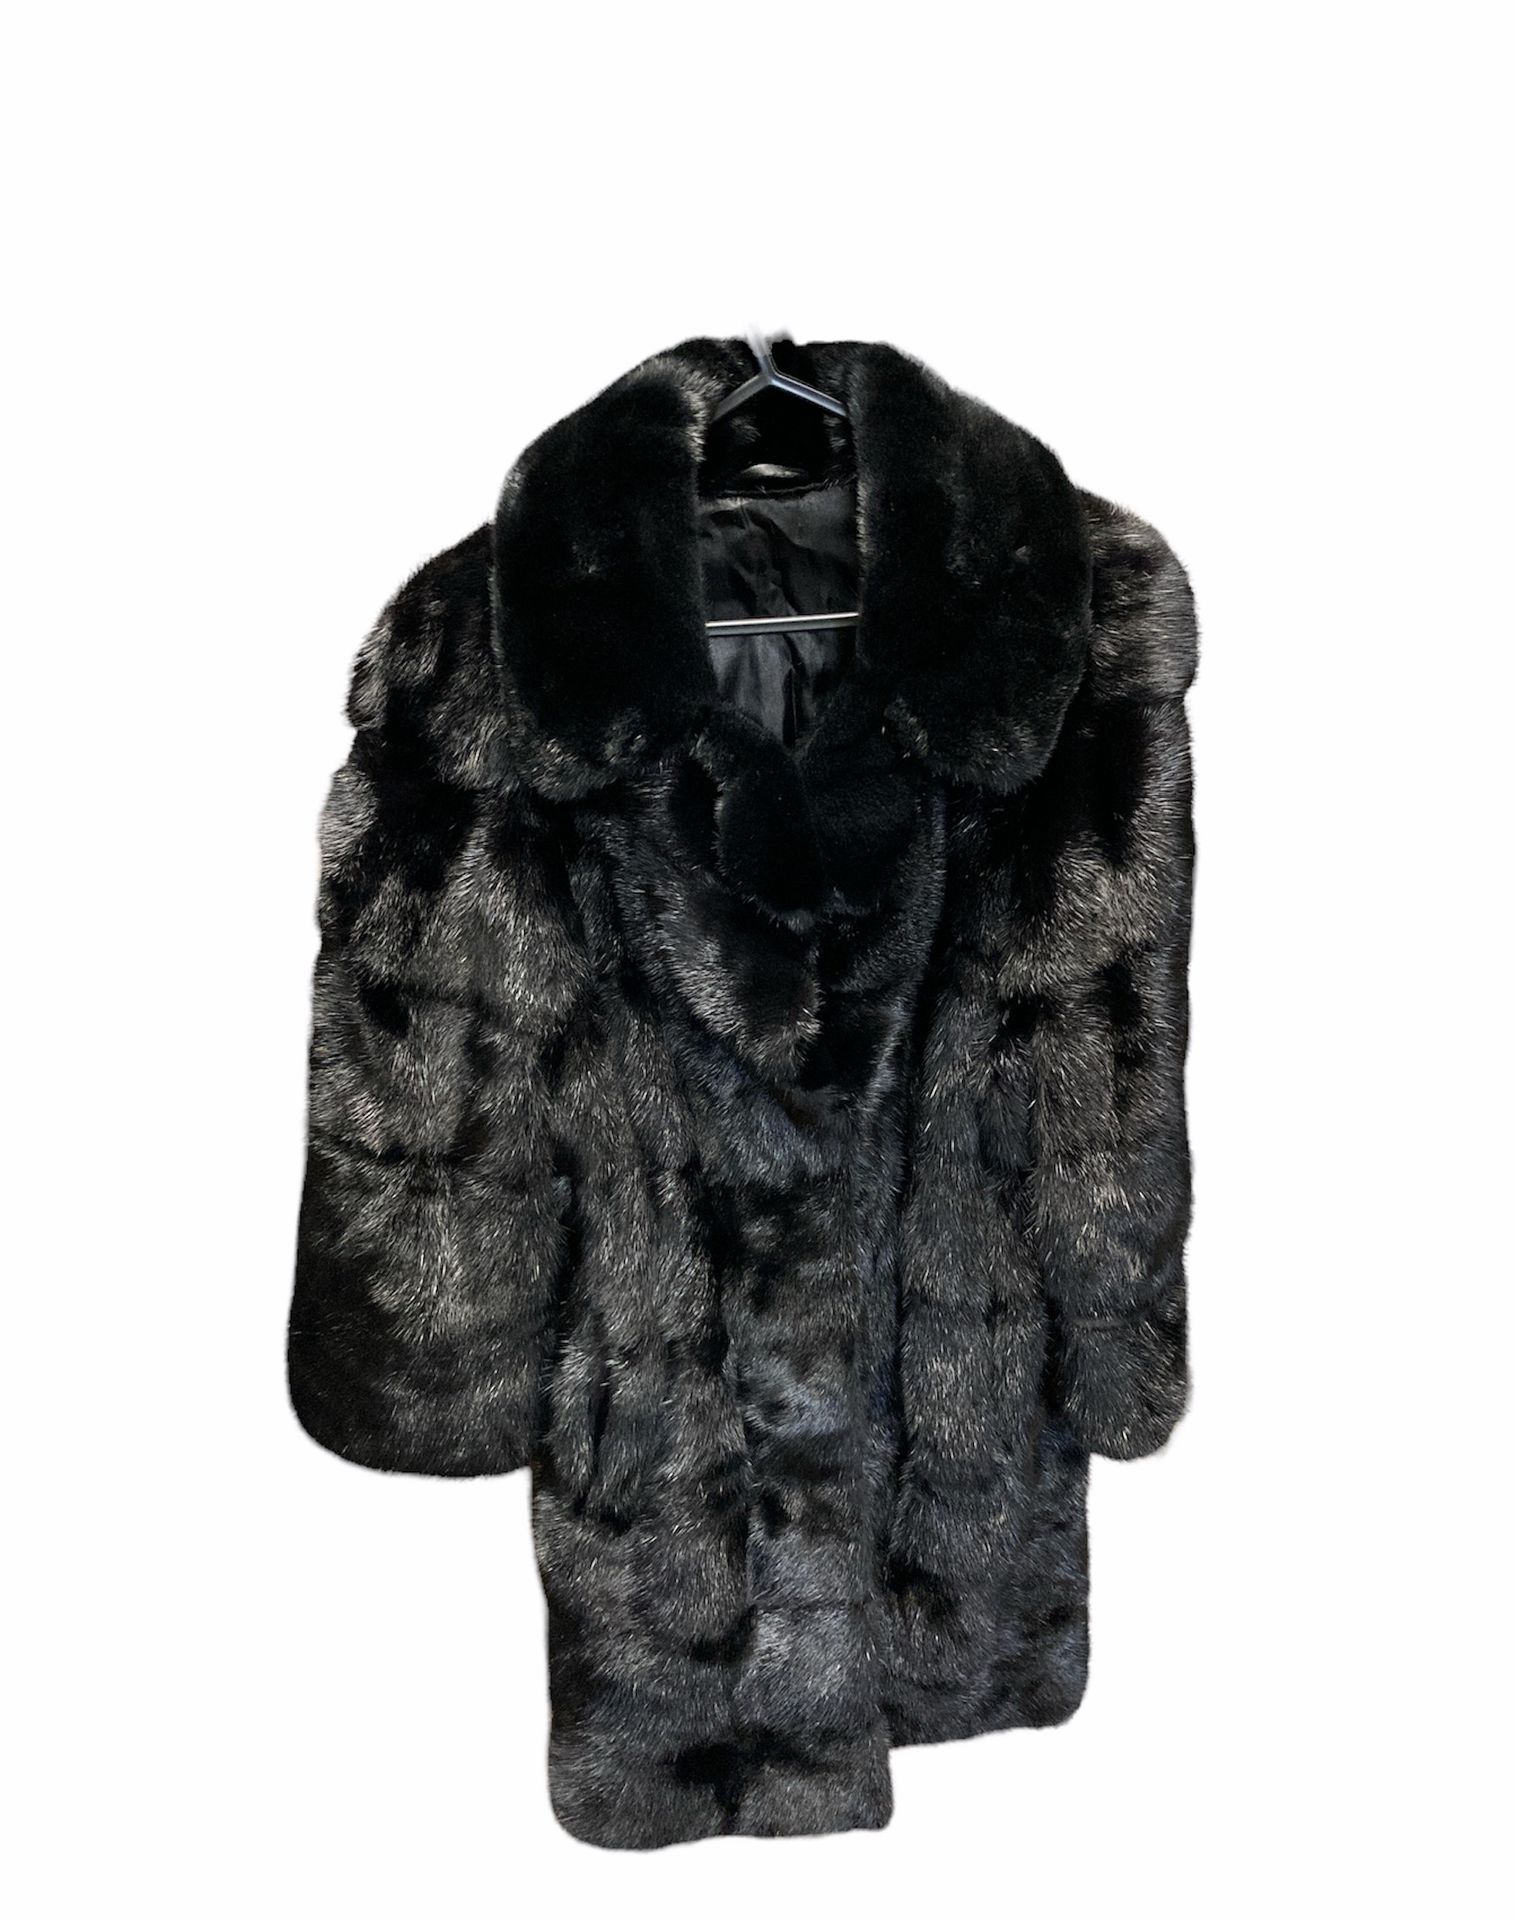 Null SAGA FURS
Mid-length jacket in black mink
Size 38.
Worn.